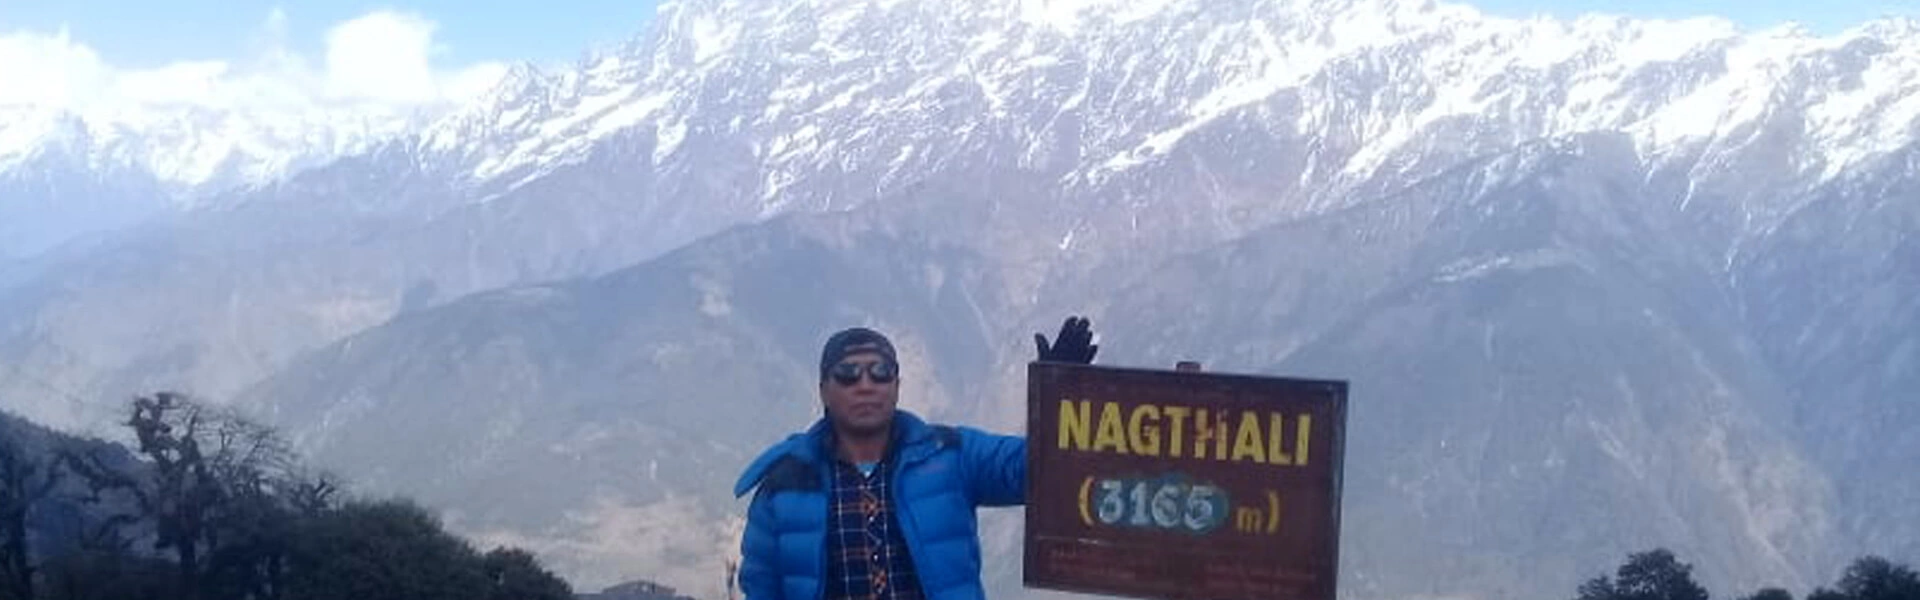 Nagthali, stopover in the Langtang region